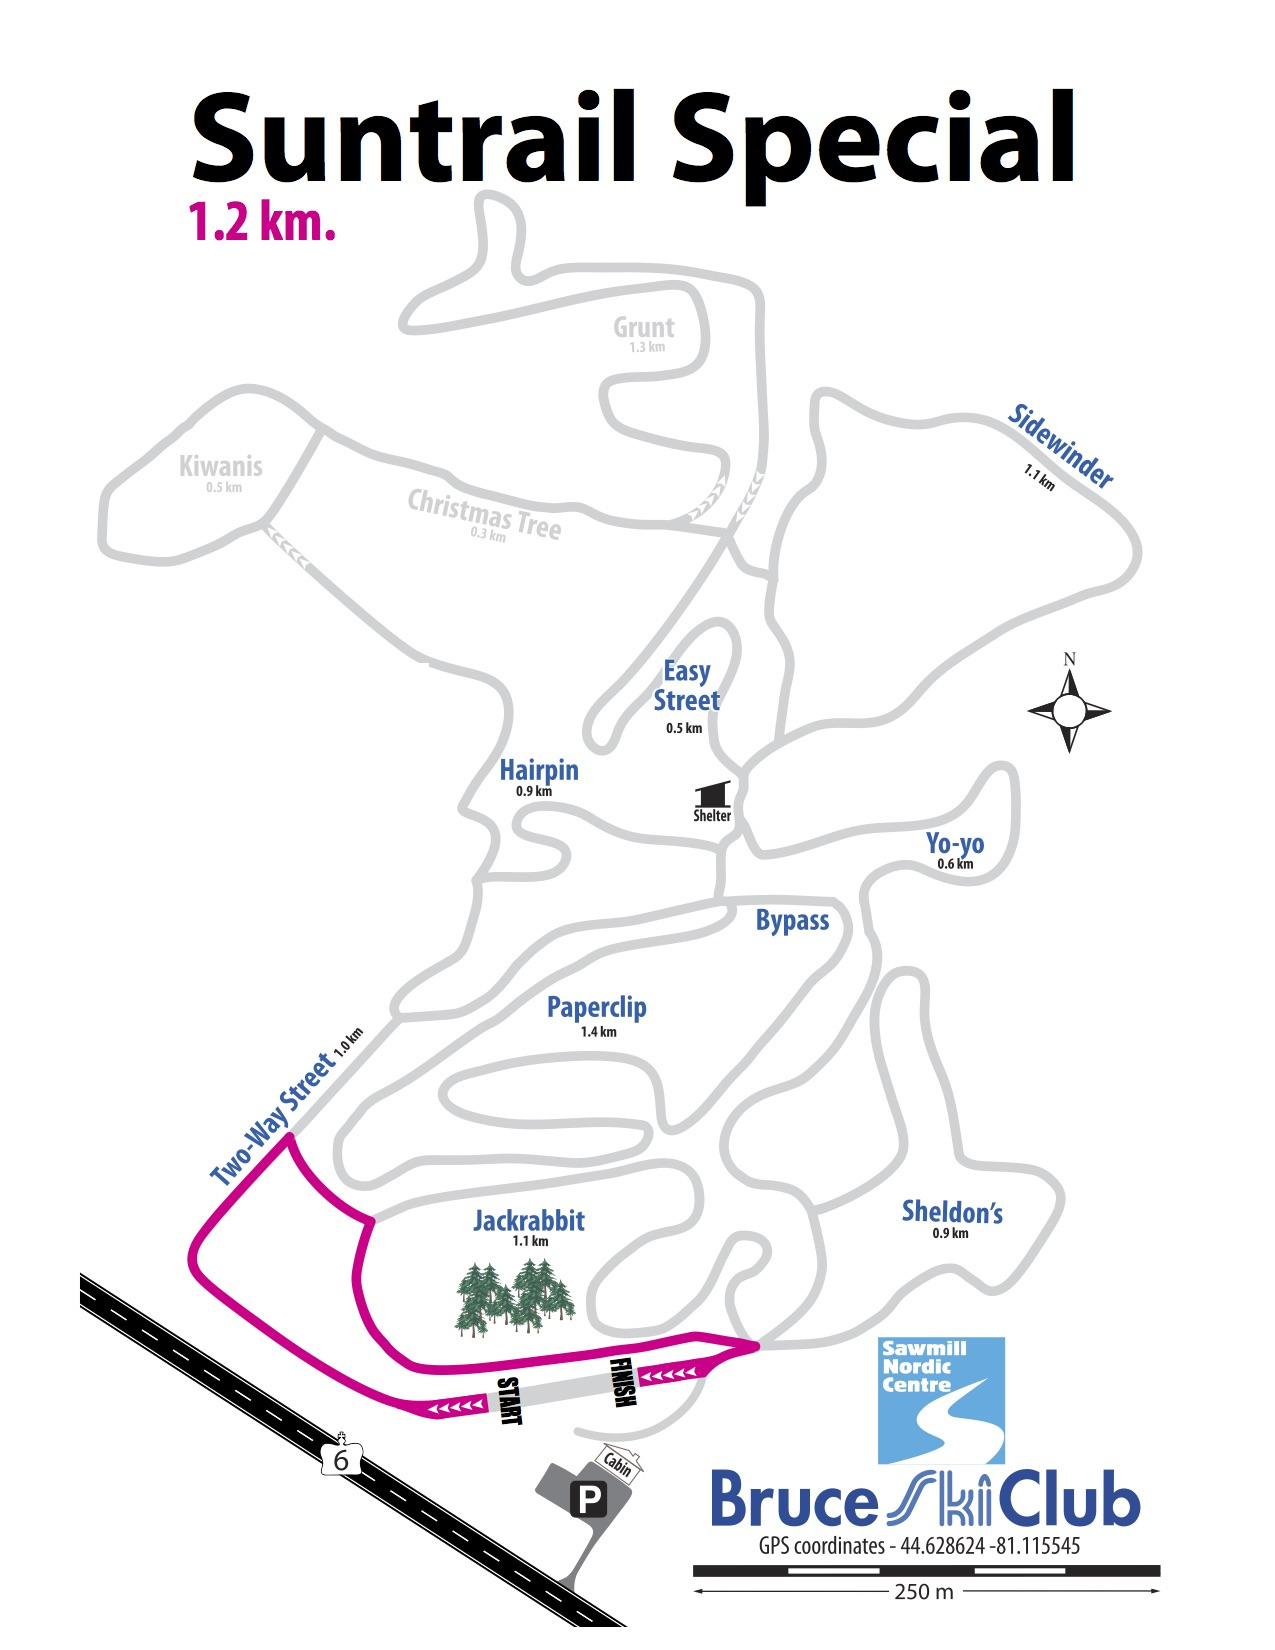 2019 Suntrail Special Cross-Country Ski Race Map – 1.2 km